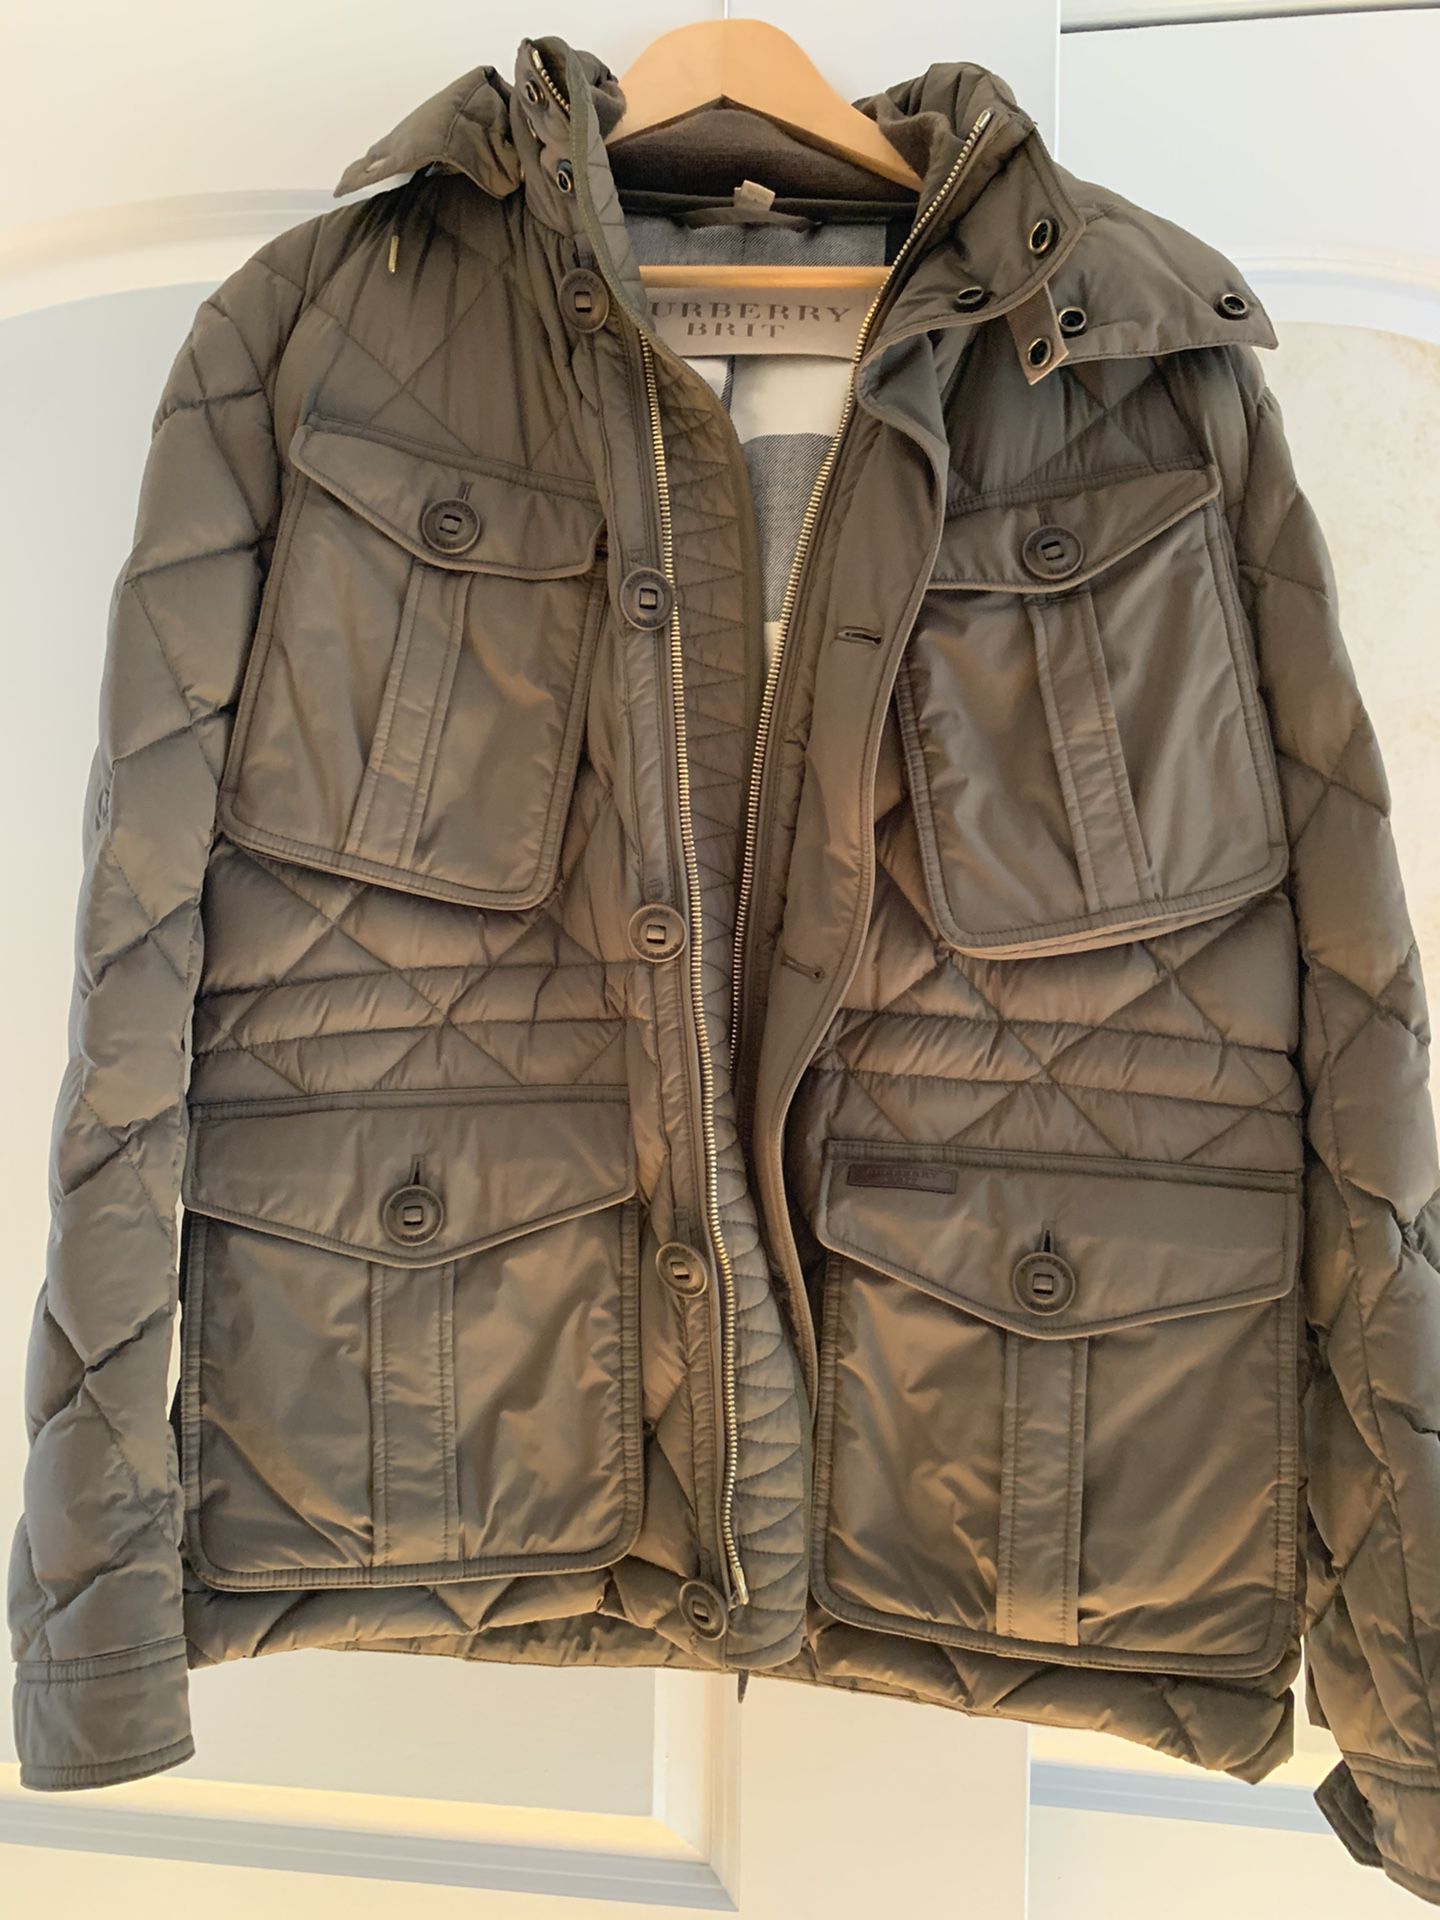 Burberry men’s winter coat, size Large